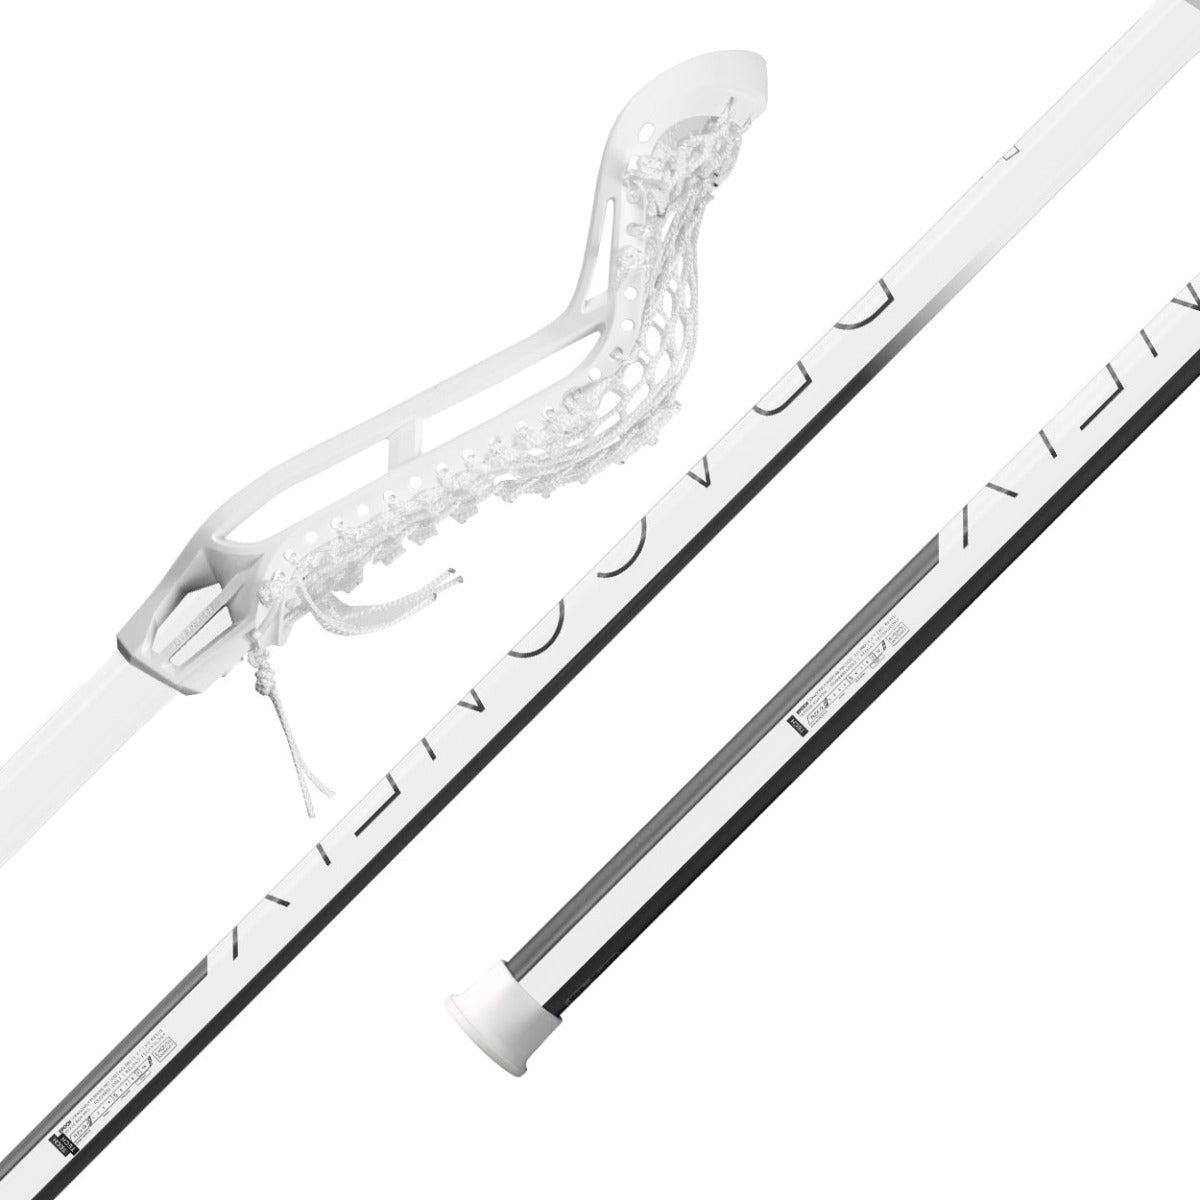 Epoch Dragonfly Purpose Pro Complete Stick-Universal Lacrosse